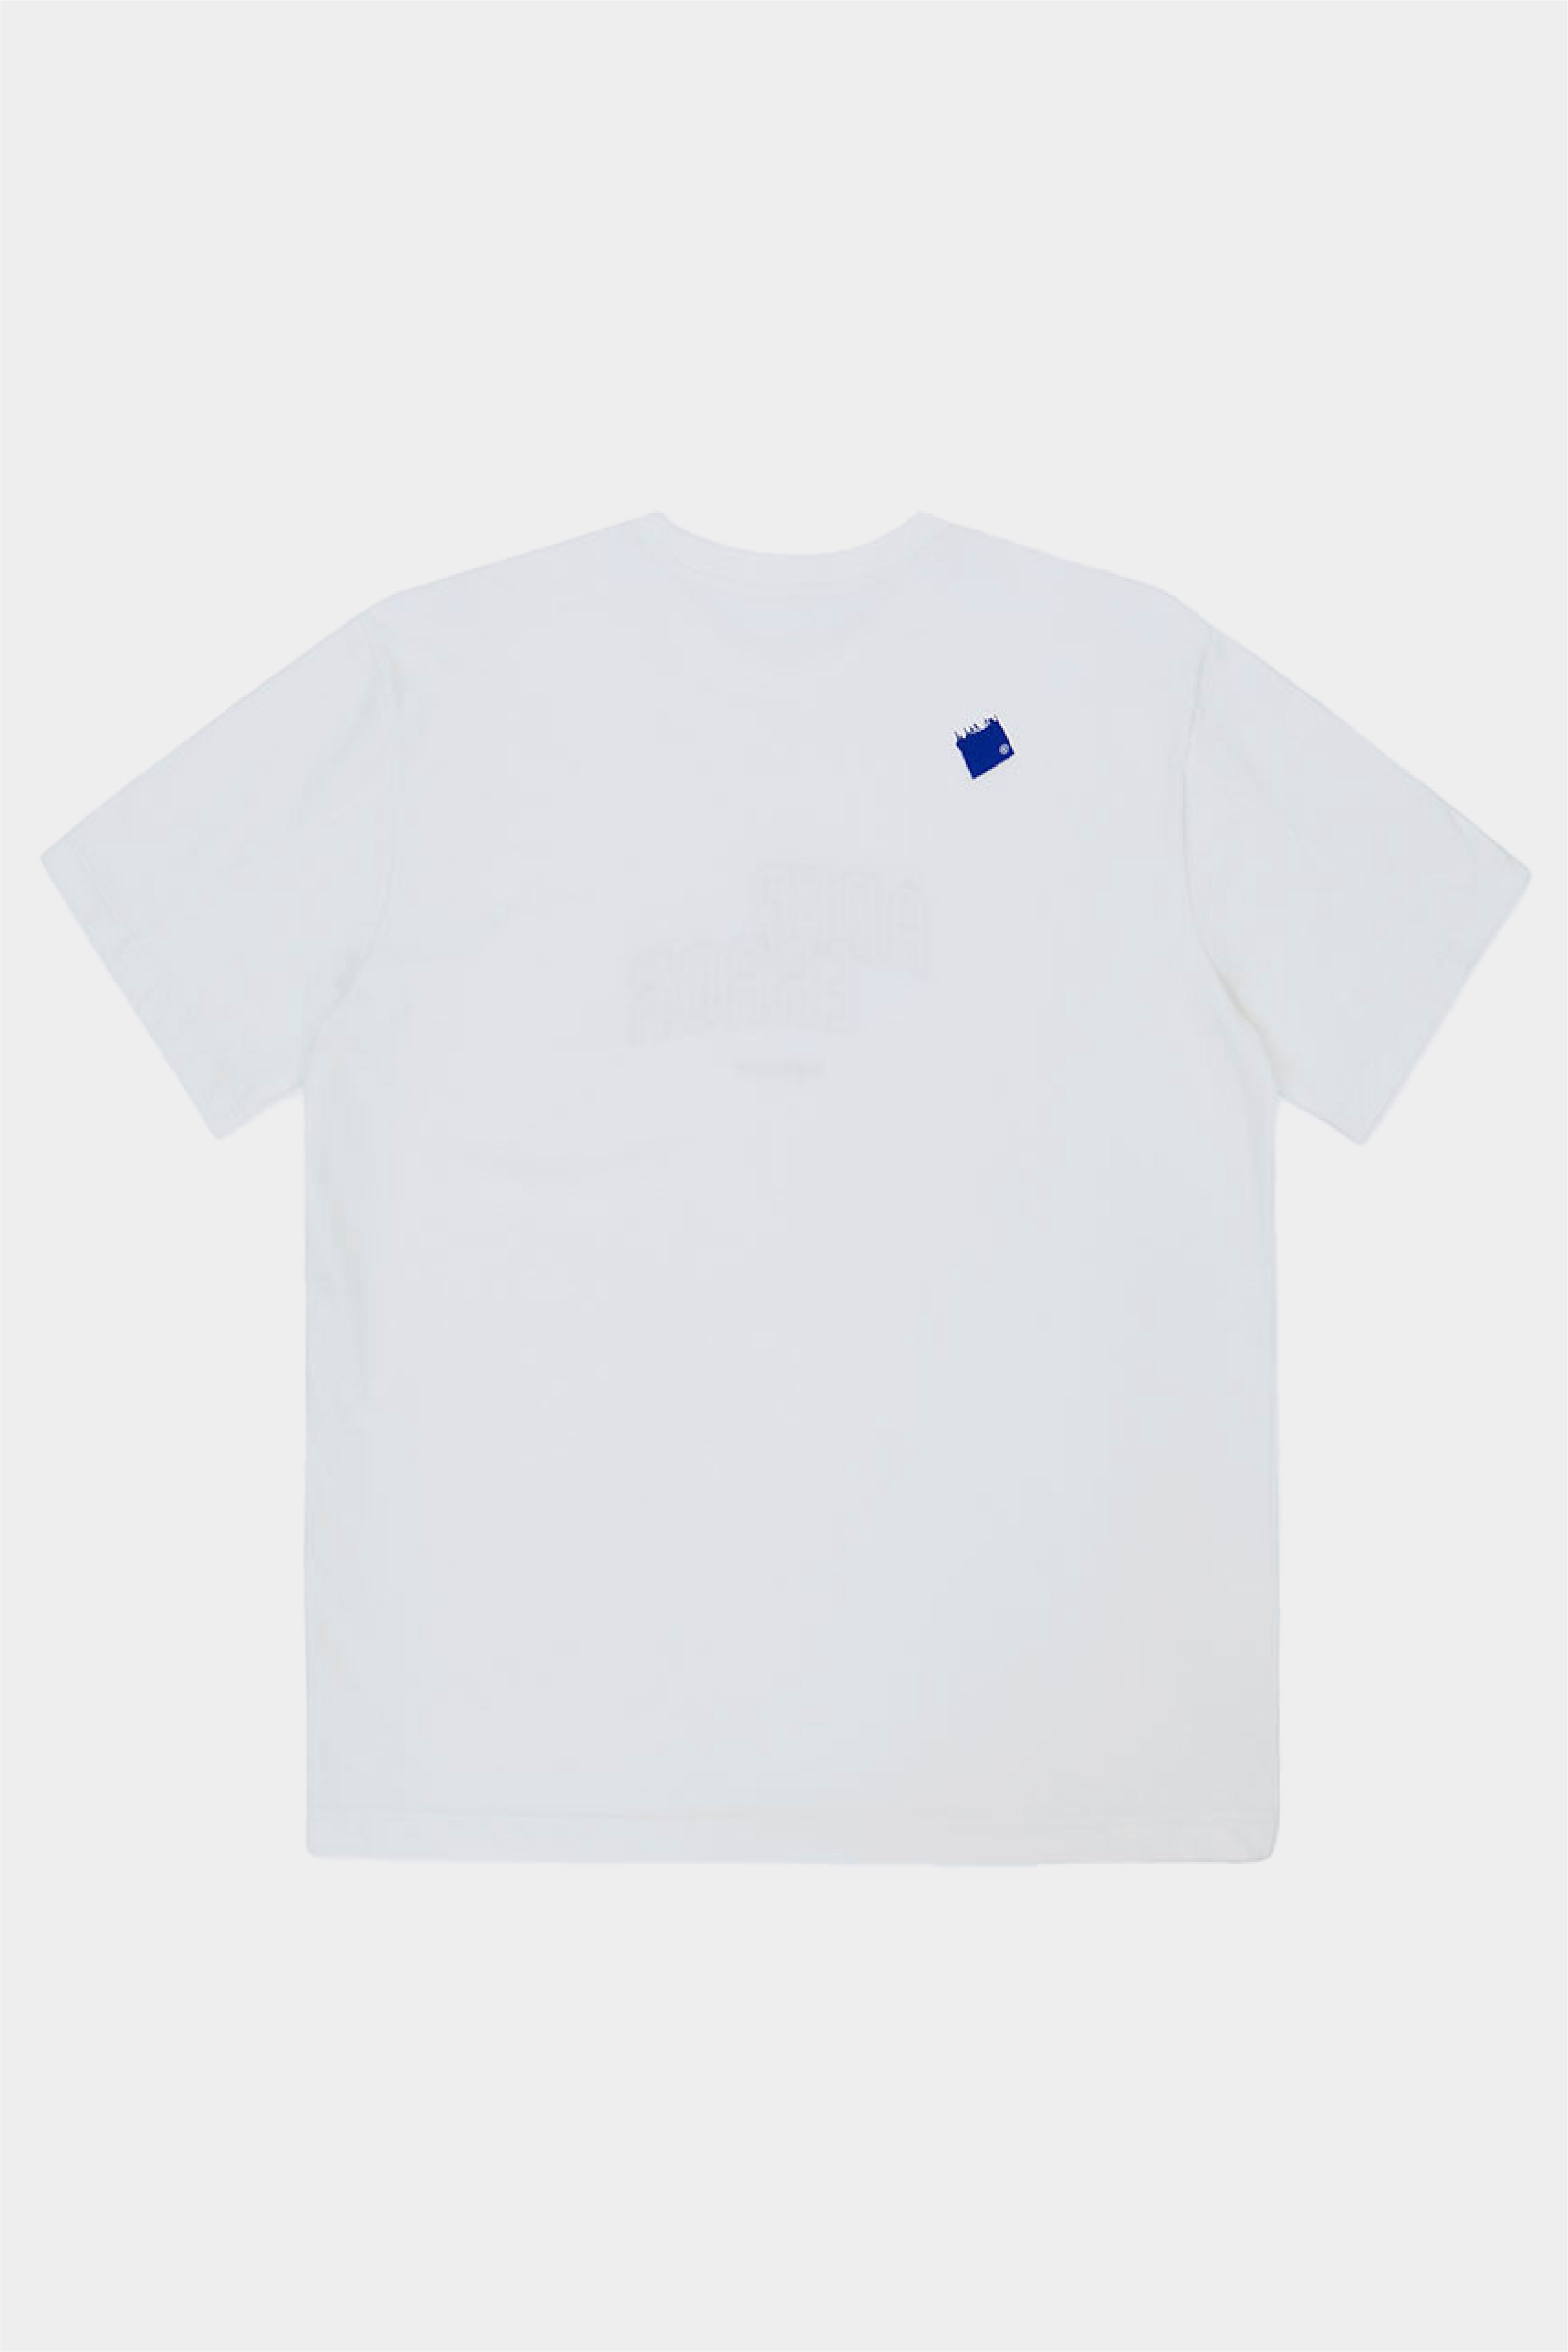 Selectshop FRAME - ADER ERROR T-Shirt T-Shirts Concept Store Dubai